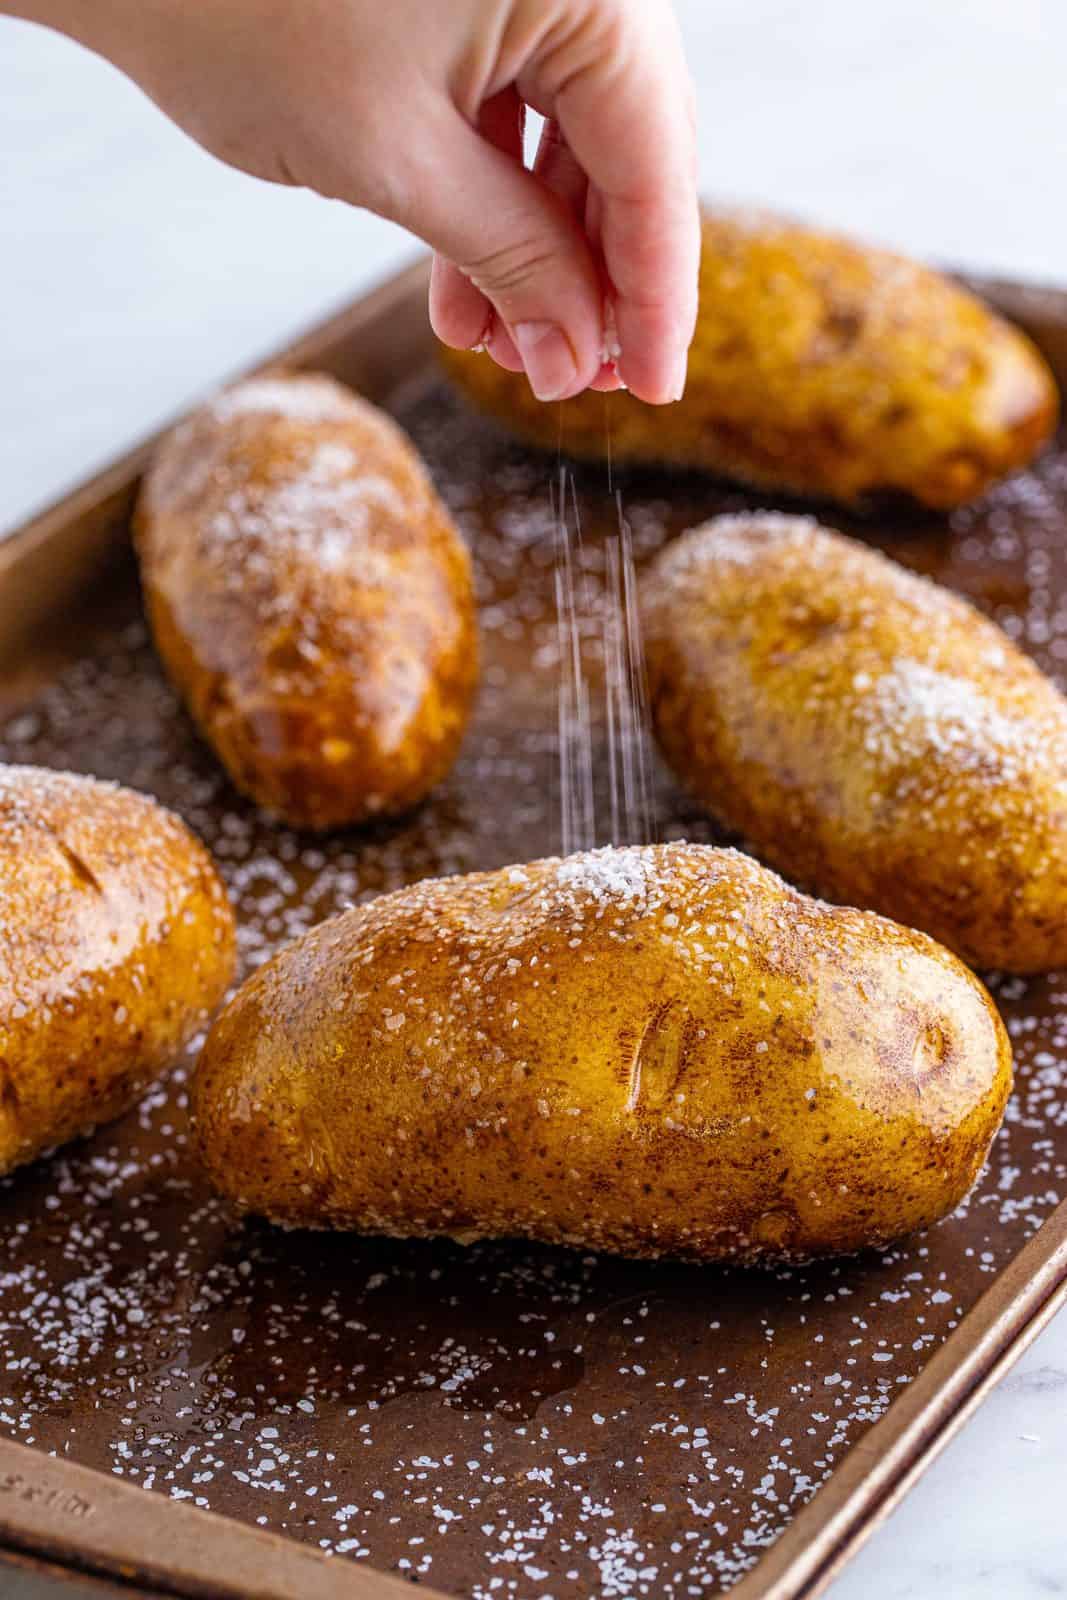 Hand sprinkling salt over potatoes on baking pan.